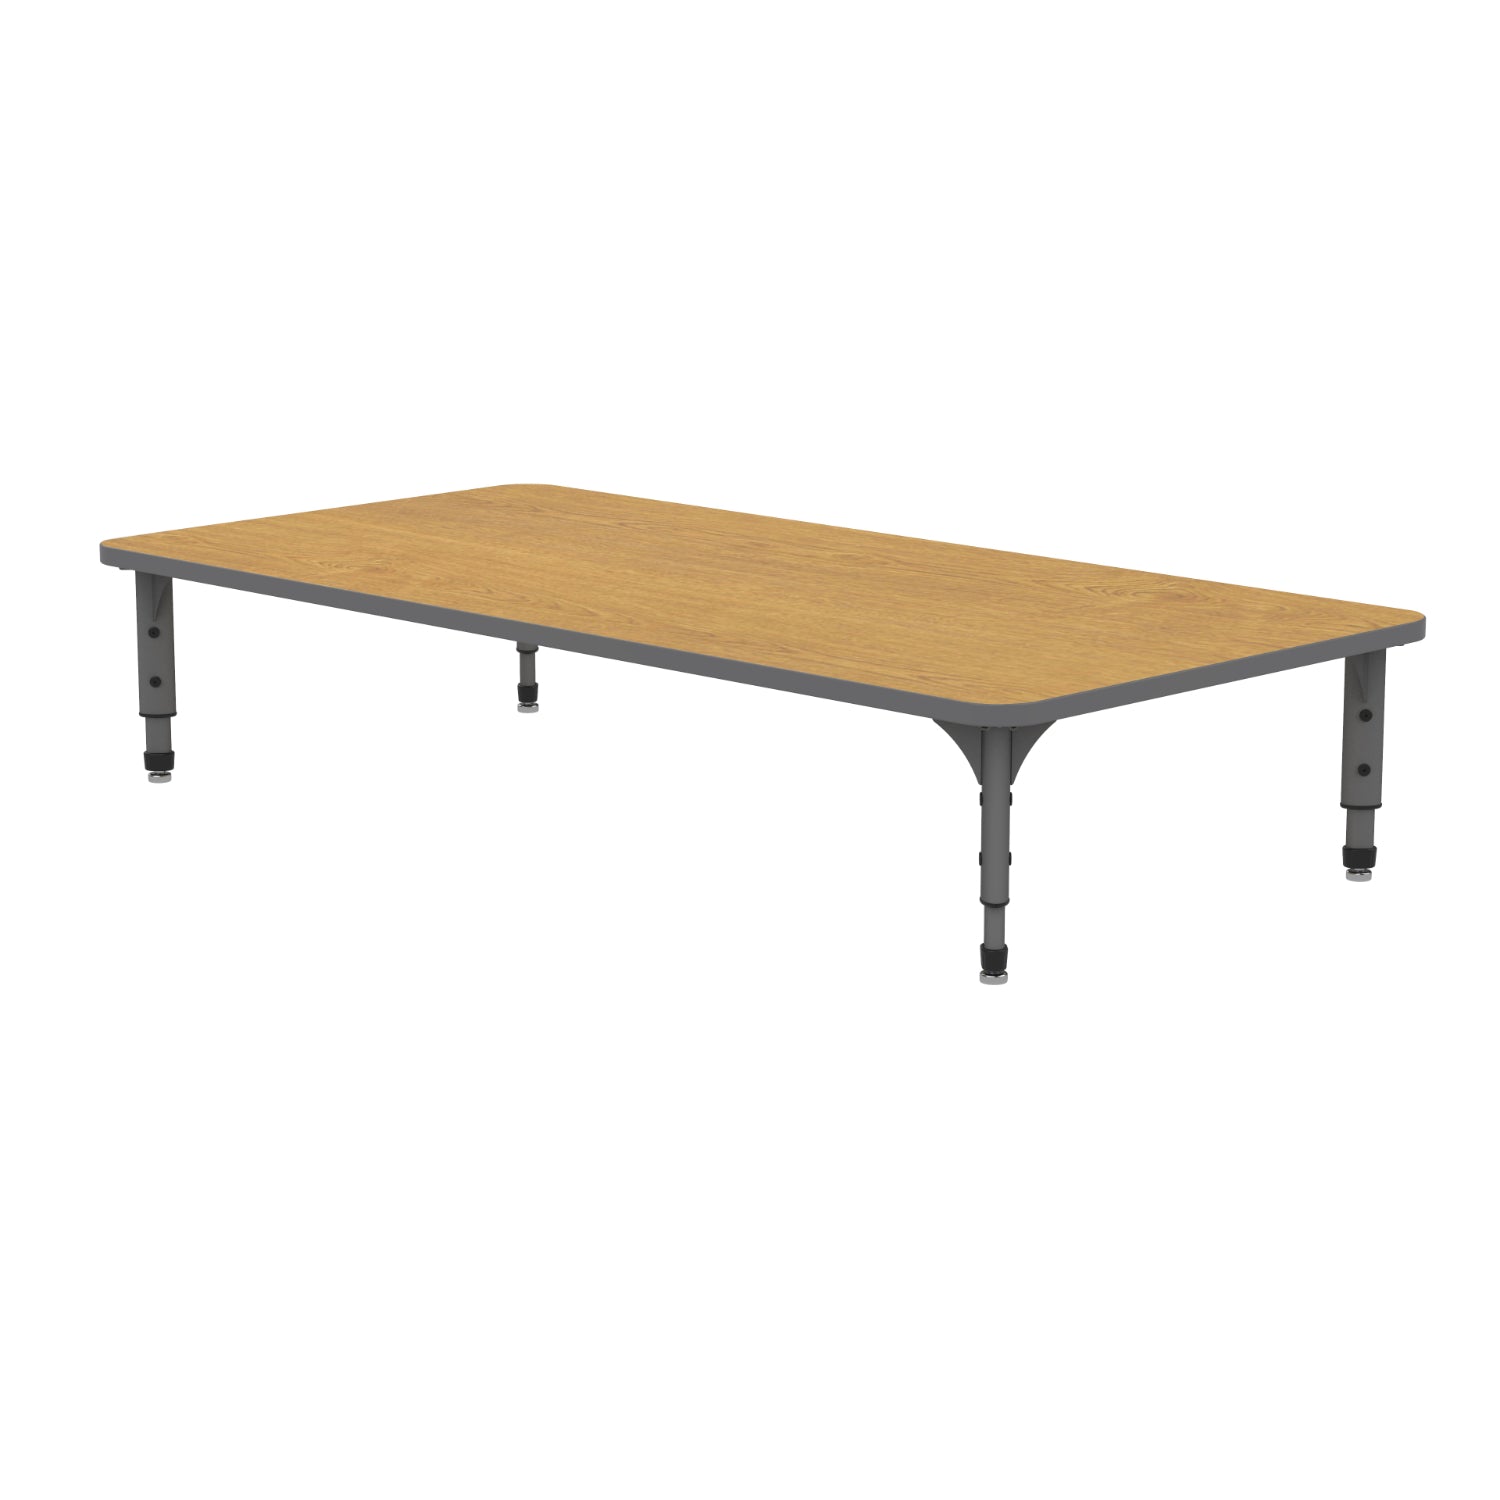 Adjustable Height Floor Activity Table, 36" x 72" Rectangle